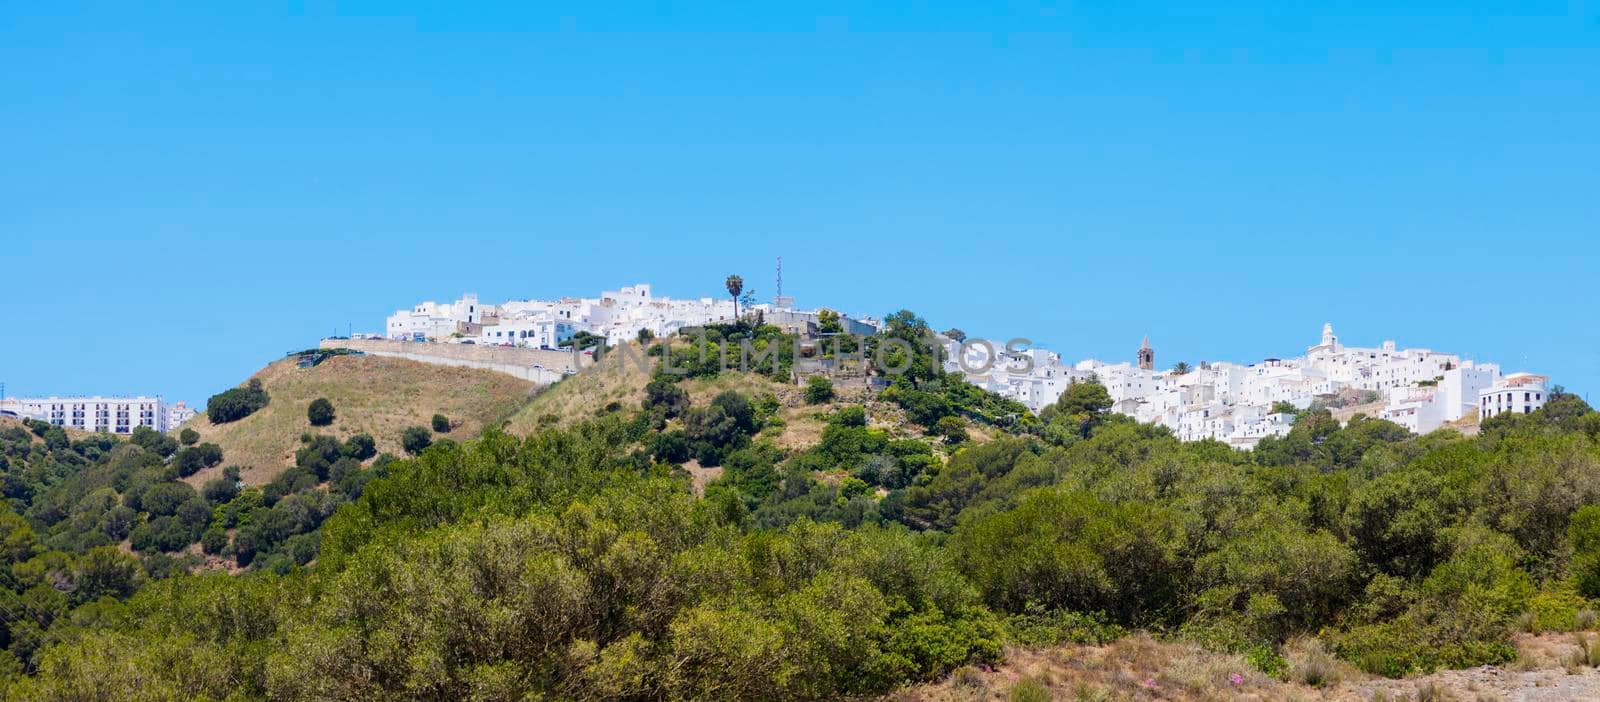 Panorama of Vejer de la Frontera by benkrut